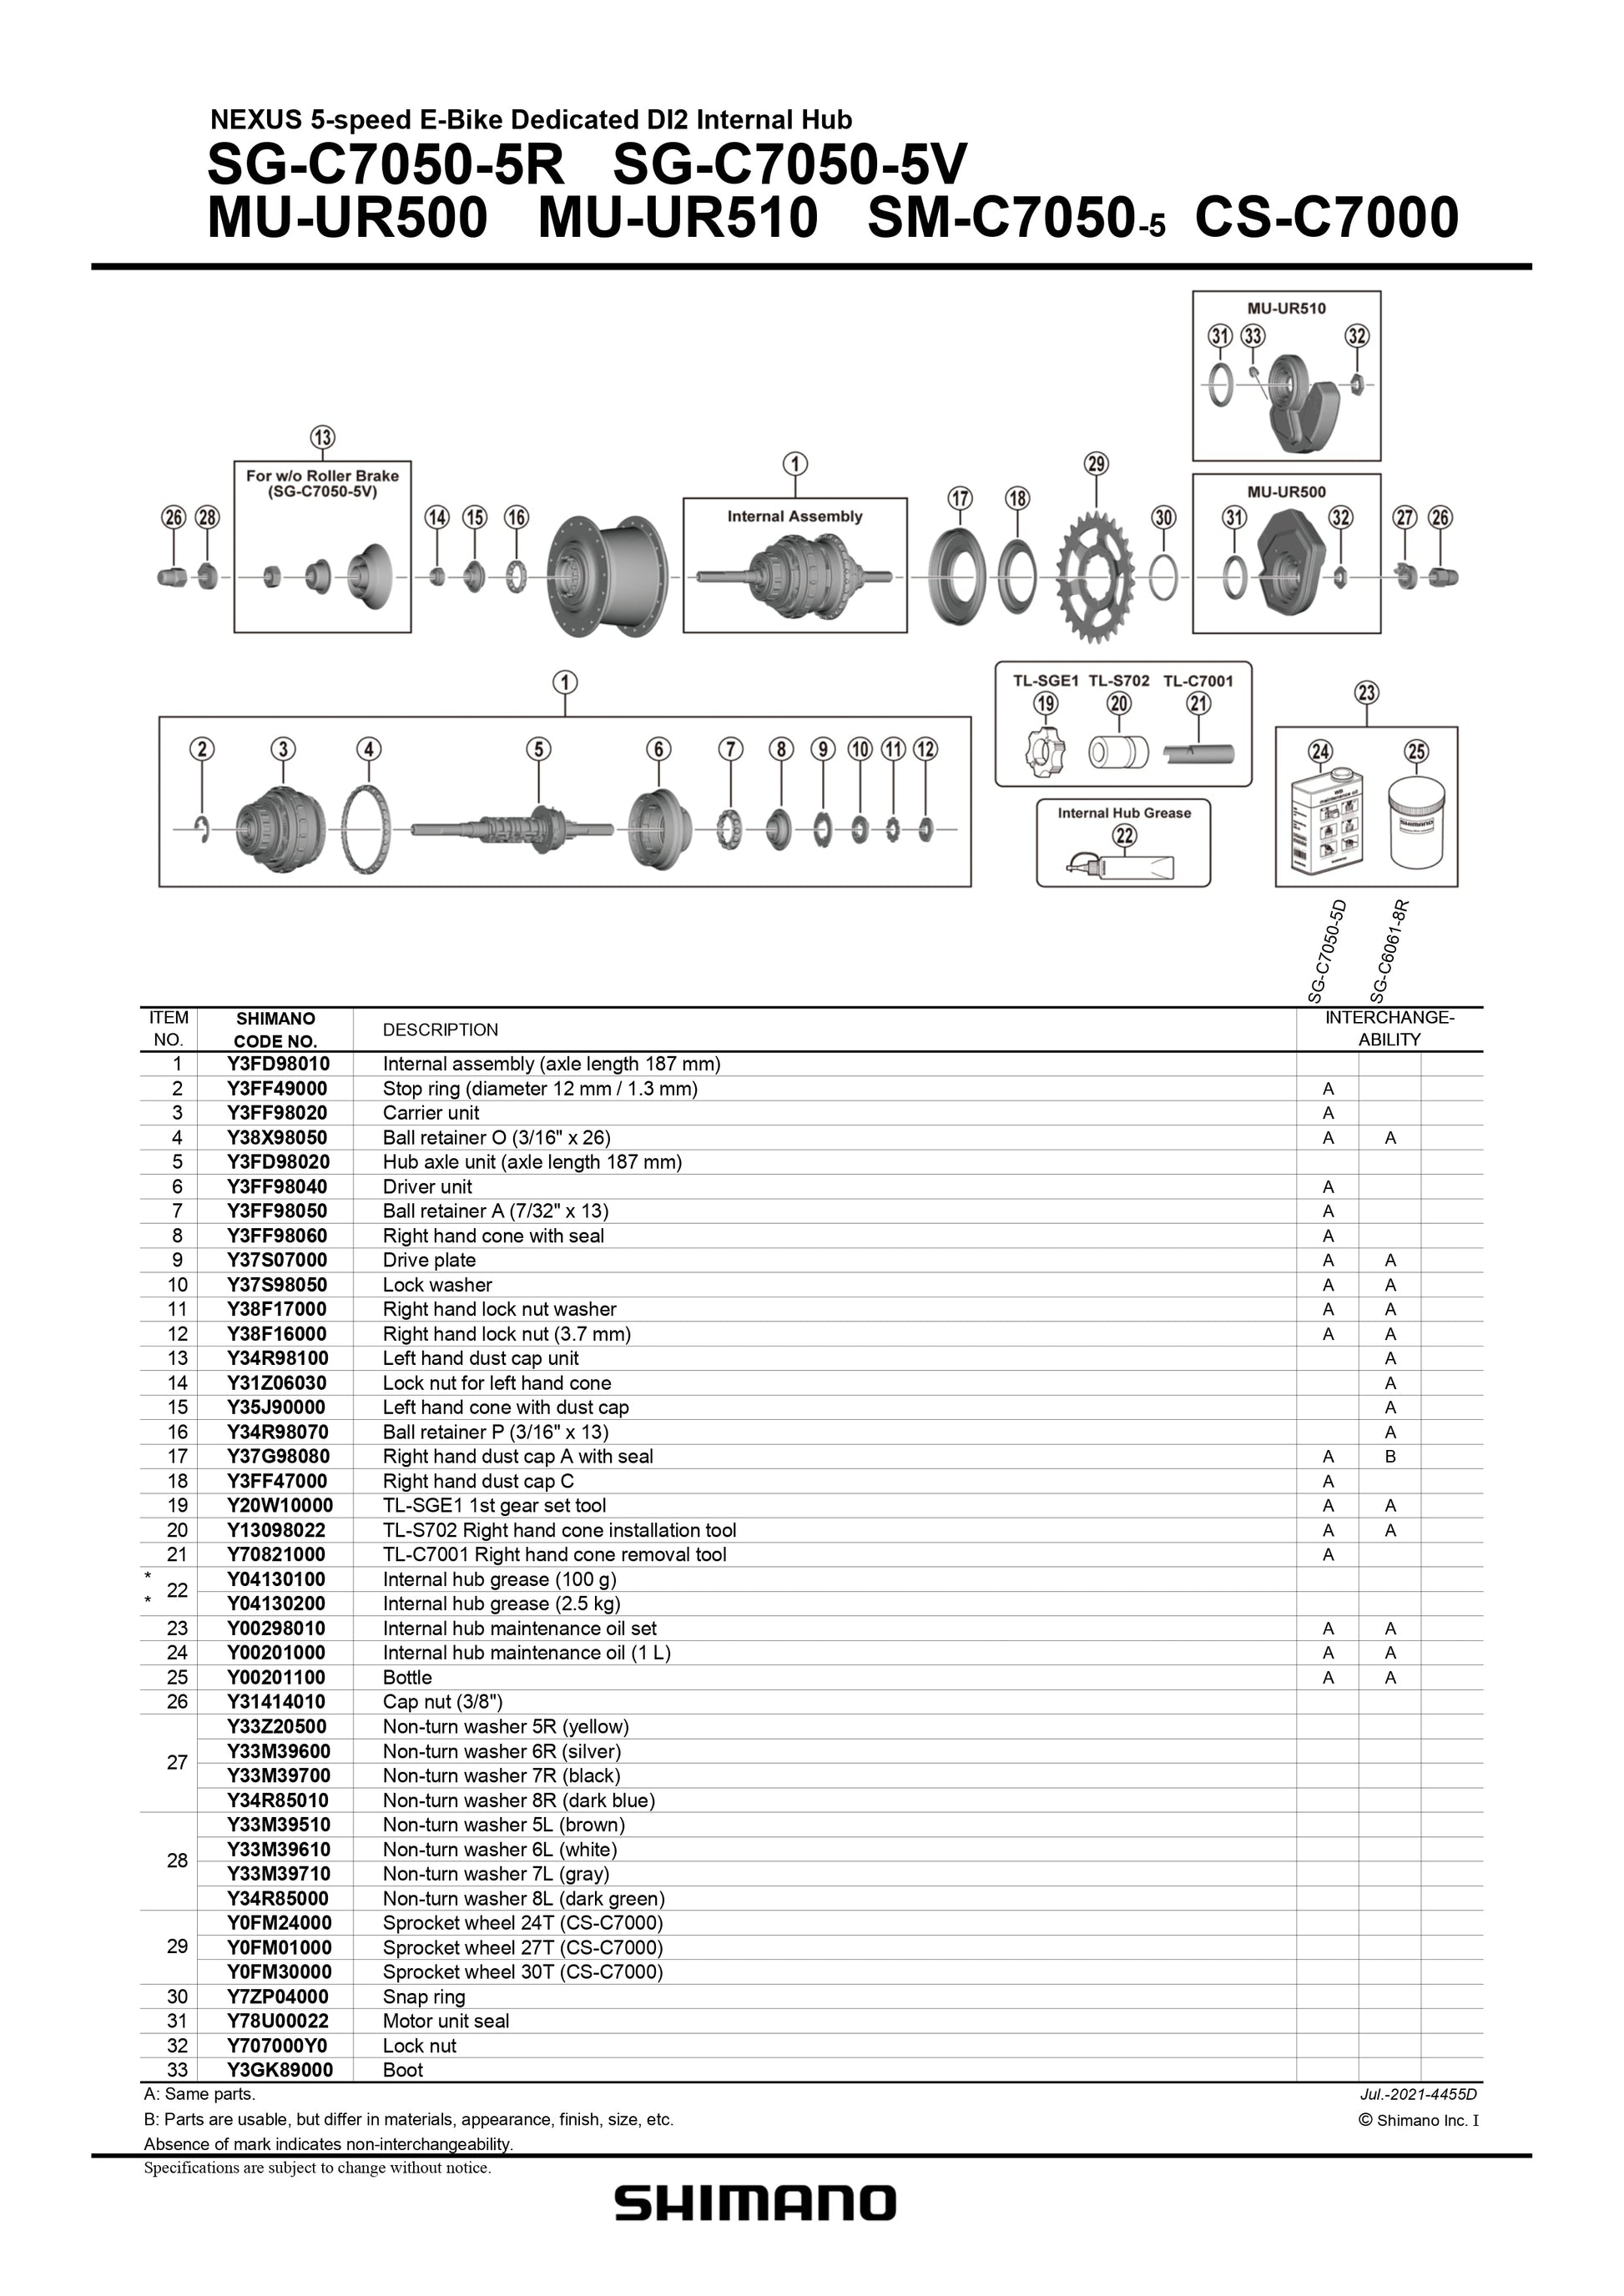 SHIMANO Nexus E-Bike Di2 SG-C7050-5R5V Internal Hub 5-Speed Internal Assembly Axle Length 187 mm - Y3FD98010-Pit Crew Cycles